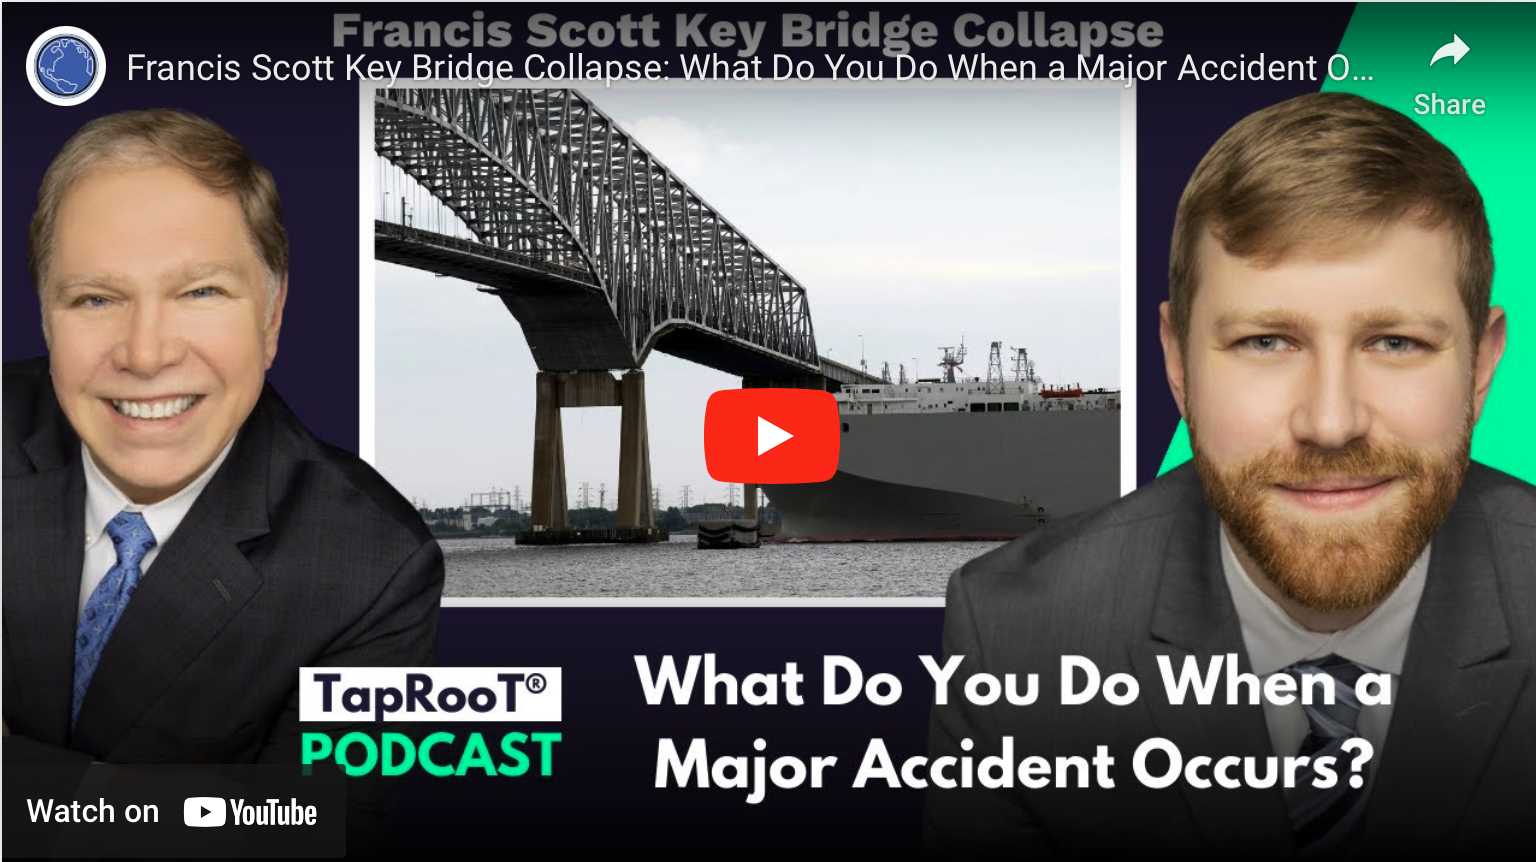 Alex and Mark discuss Francis Scott Key Bridge collision